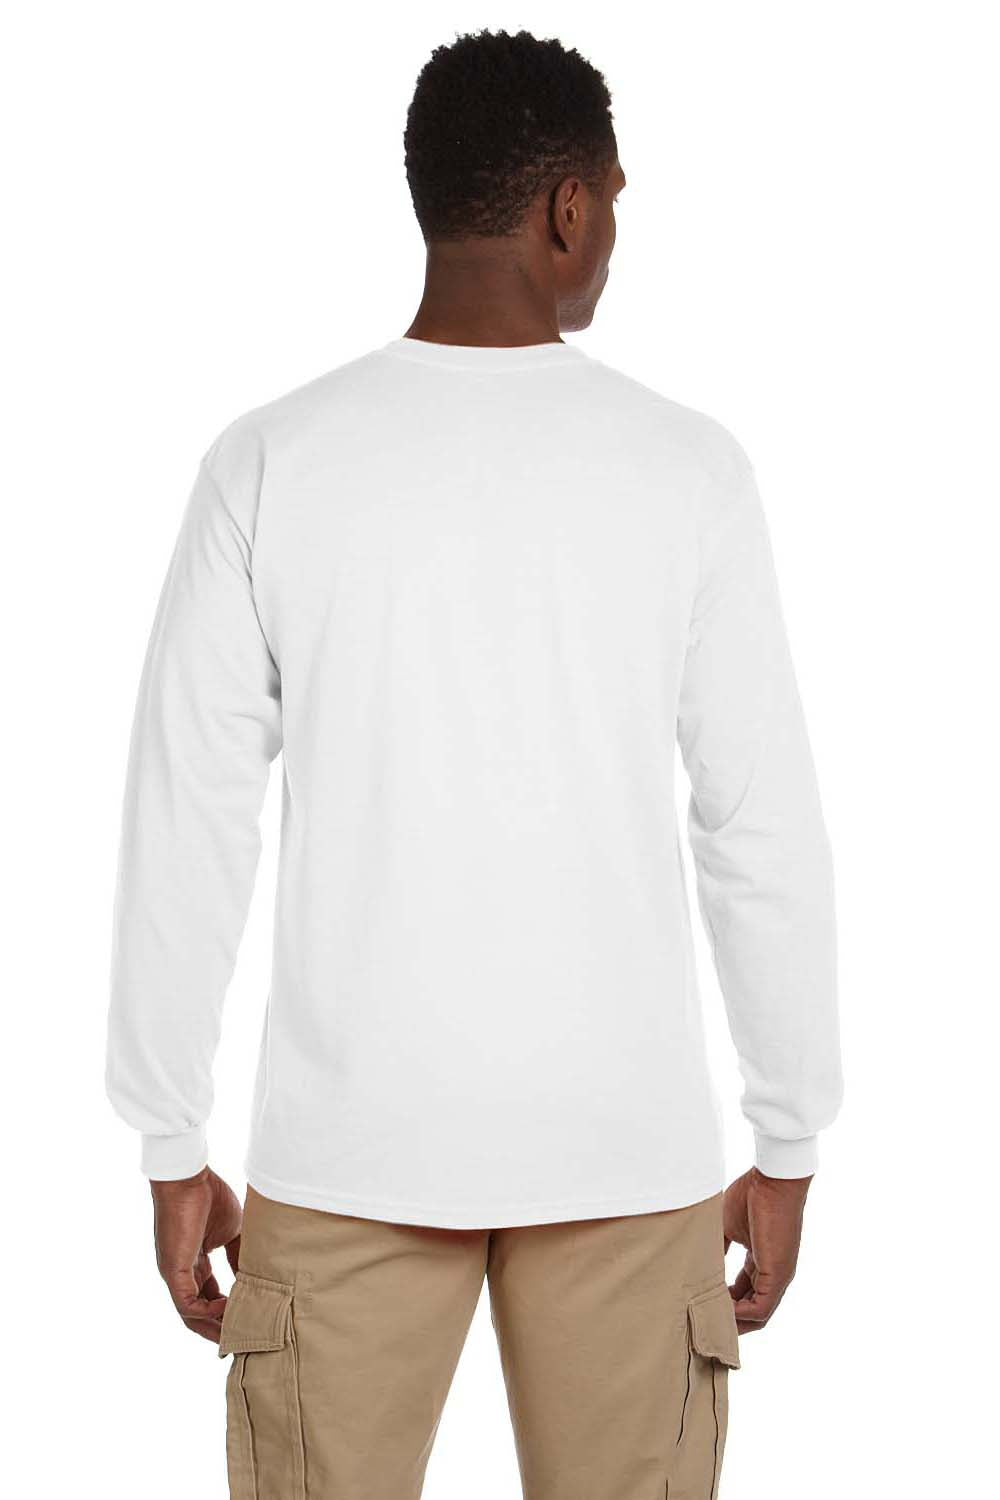 Gildan G241 Mens Ultra Long Sleeve Crewneck T-Shirt w/ Pocket White Back